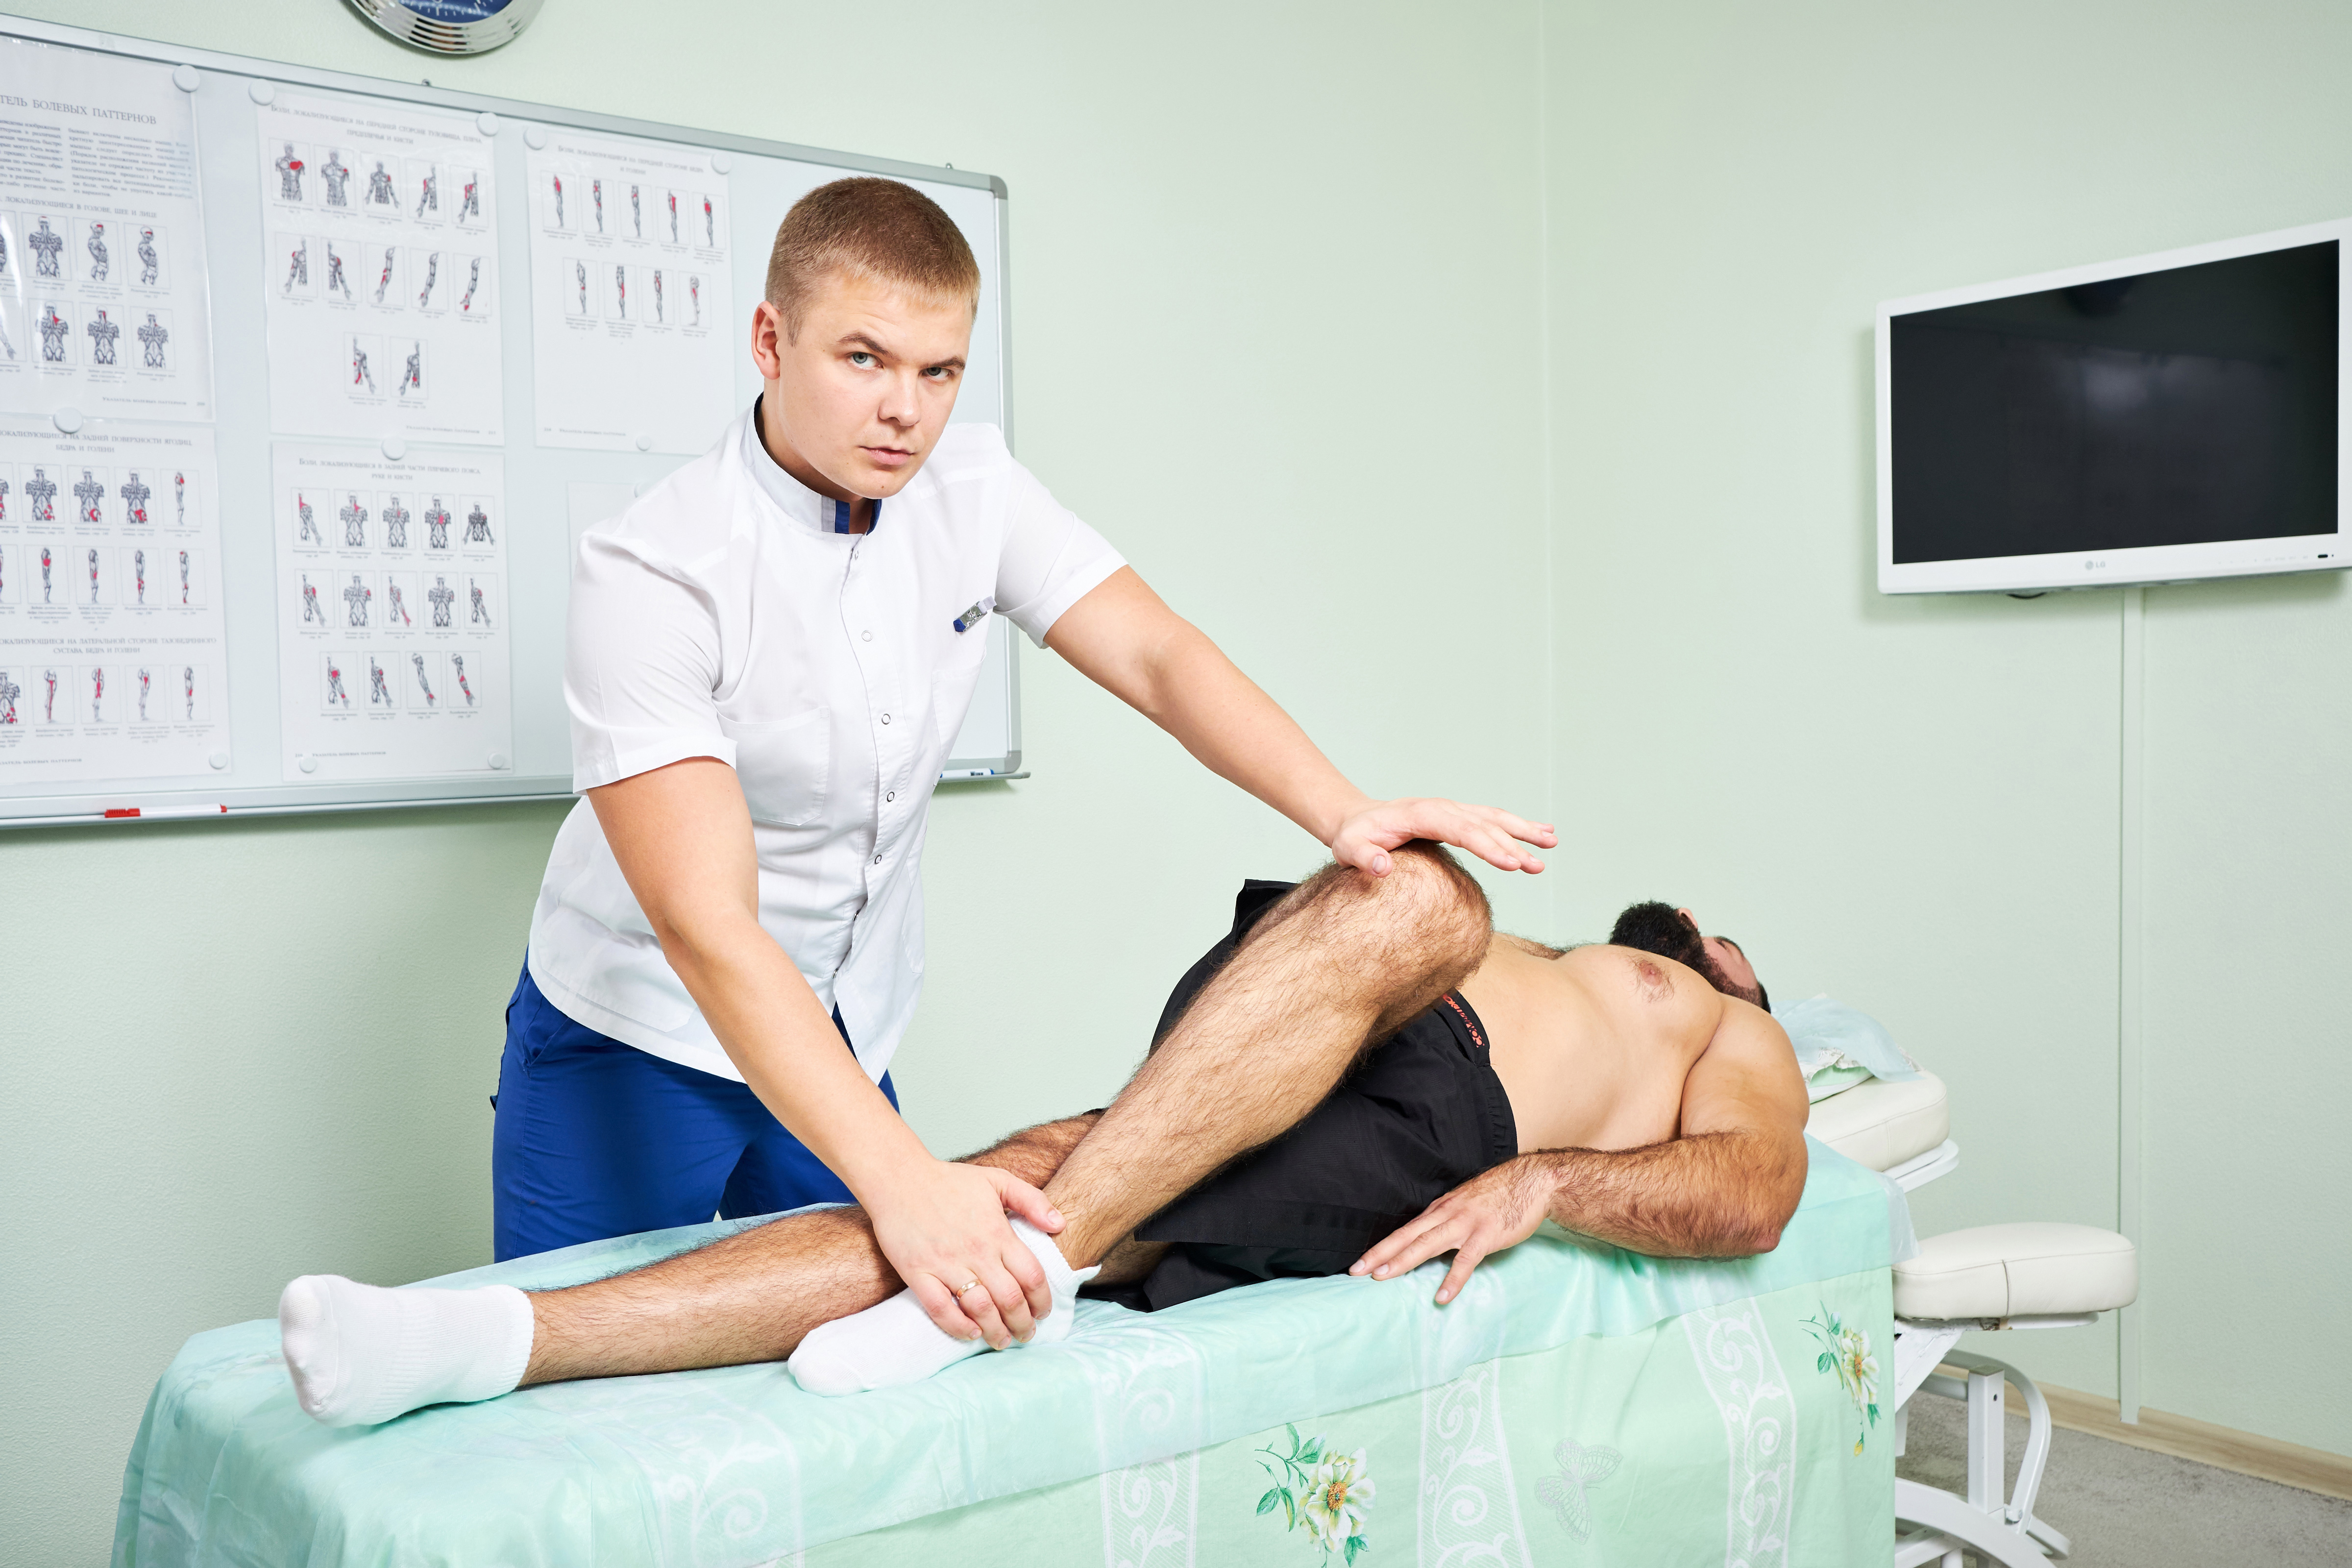 Лечение артроза тазобедренного сустава без операции и медикаментов в Москве